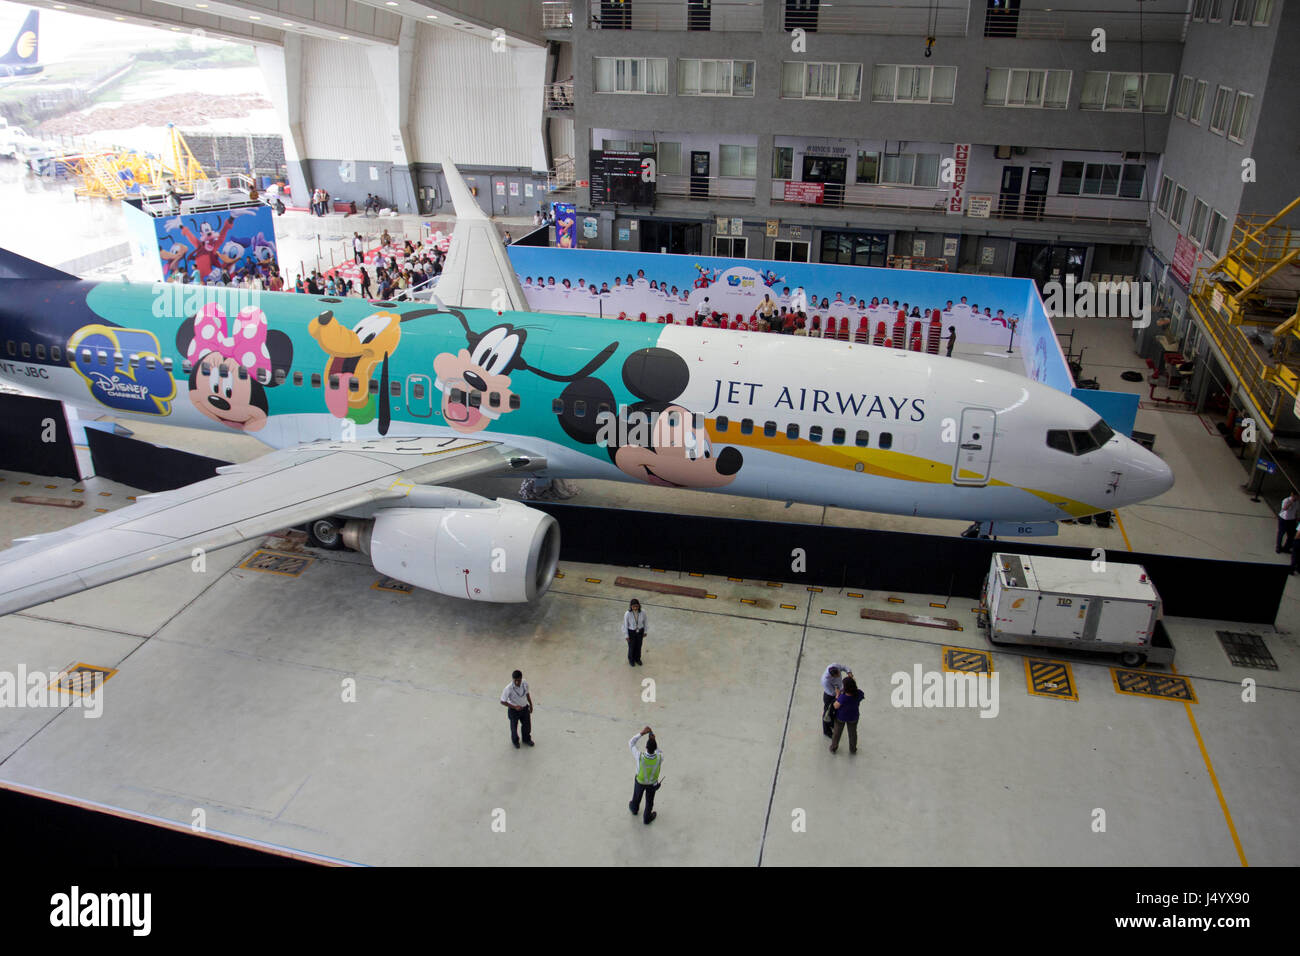 Disney branded jet airways aeroplane, mumbai, maharashtra, india, asia Stock Photo